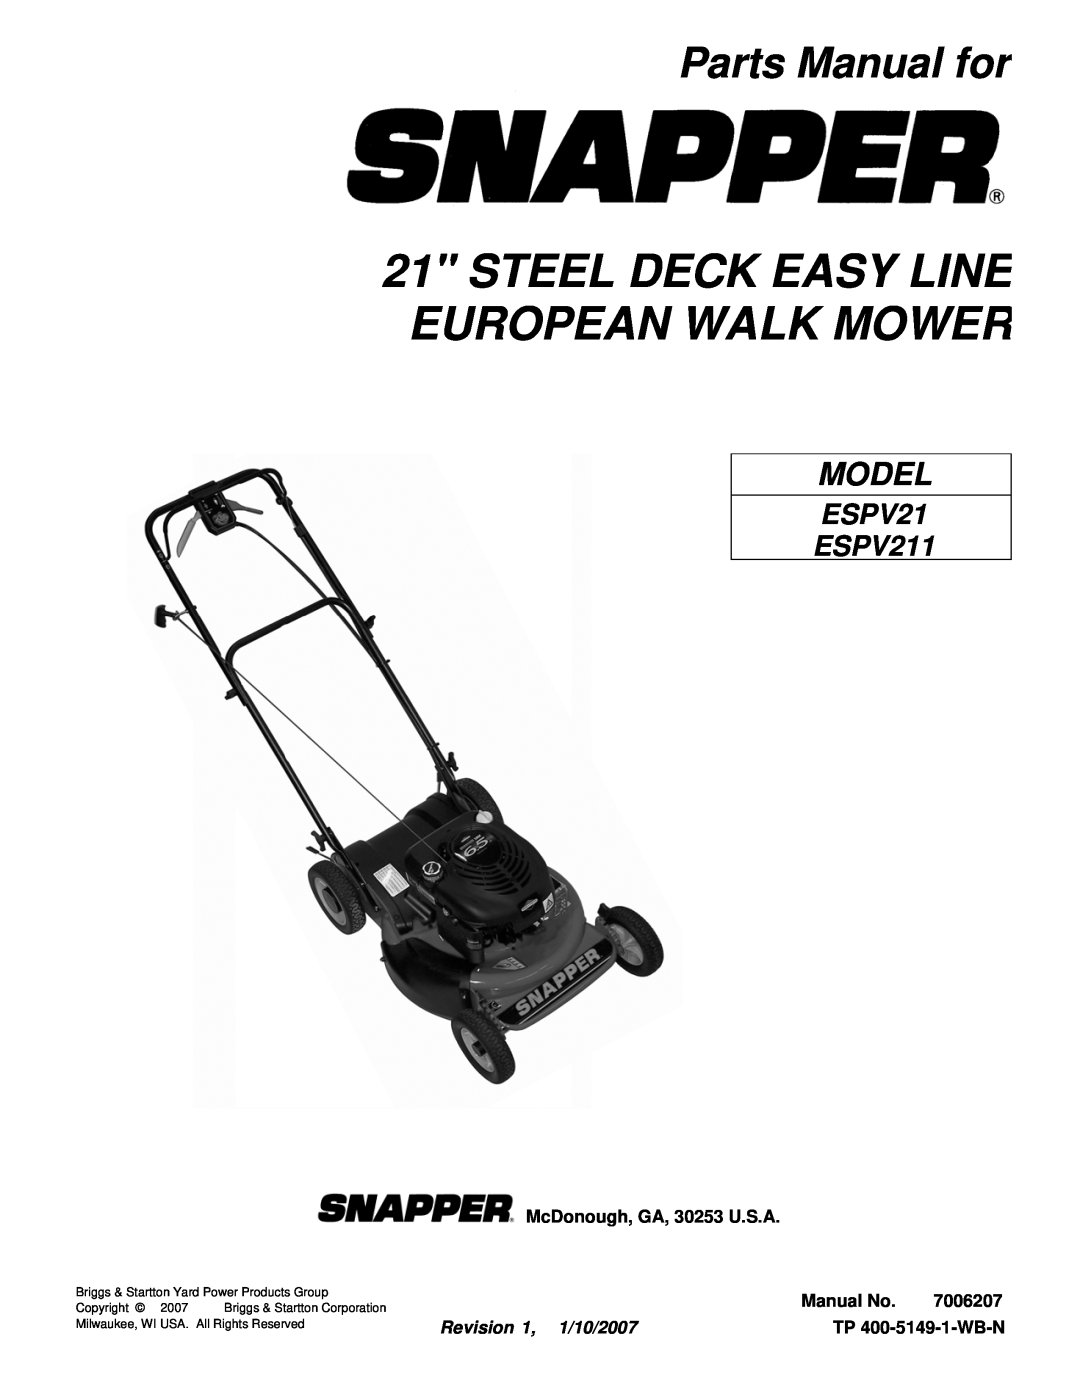 Snapper ESPV21 manual Steel Deck Easy Line European Walk Mower, Parts Manual for, McDonough, GA, 30253 U.S.A, Manual No 